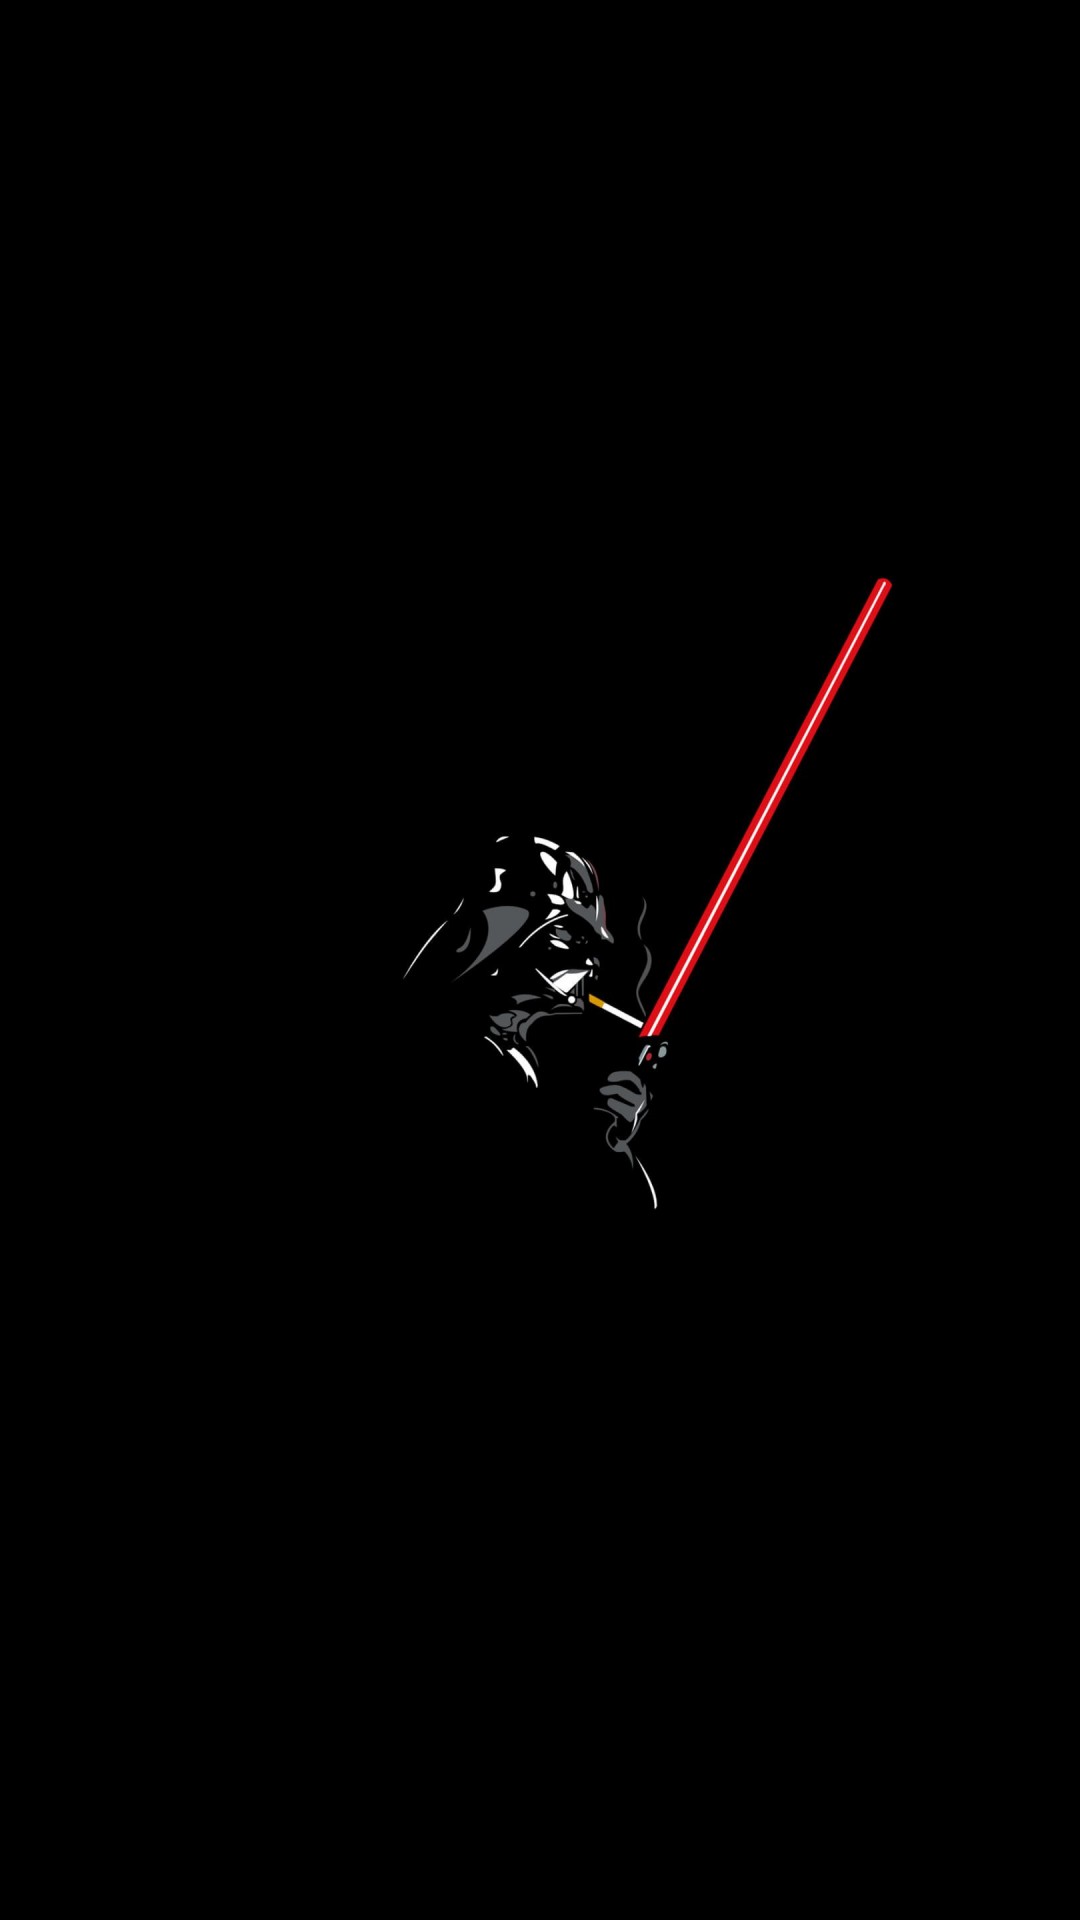 Darth Vader Lighting a Cigarette Wallpaper for LG G2